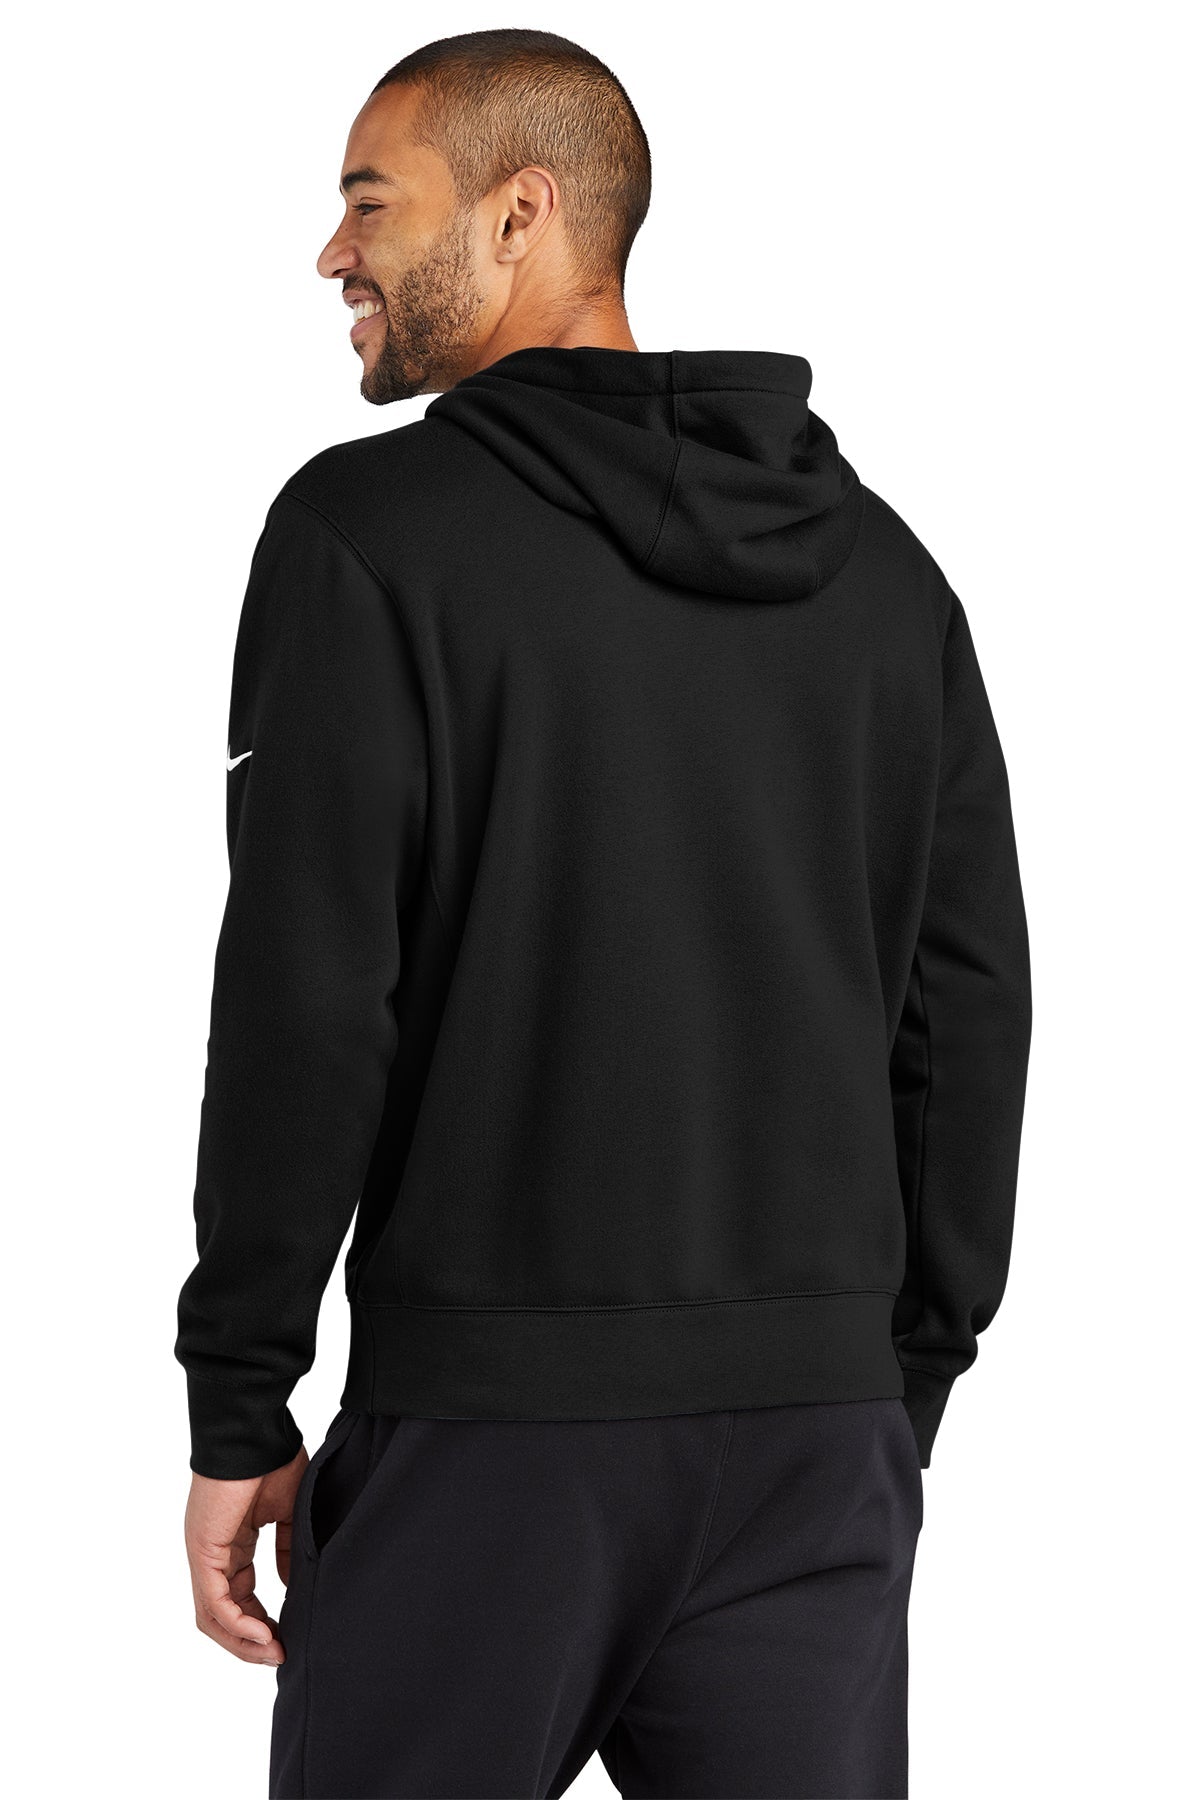 Nike Club Swoosh Customized Hoodies, Black